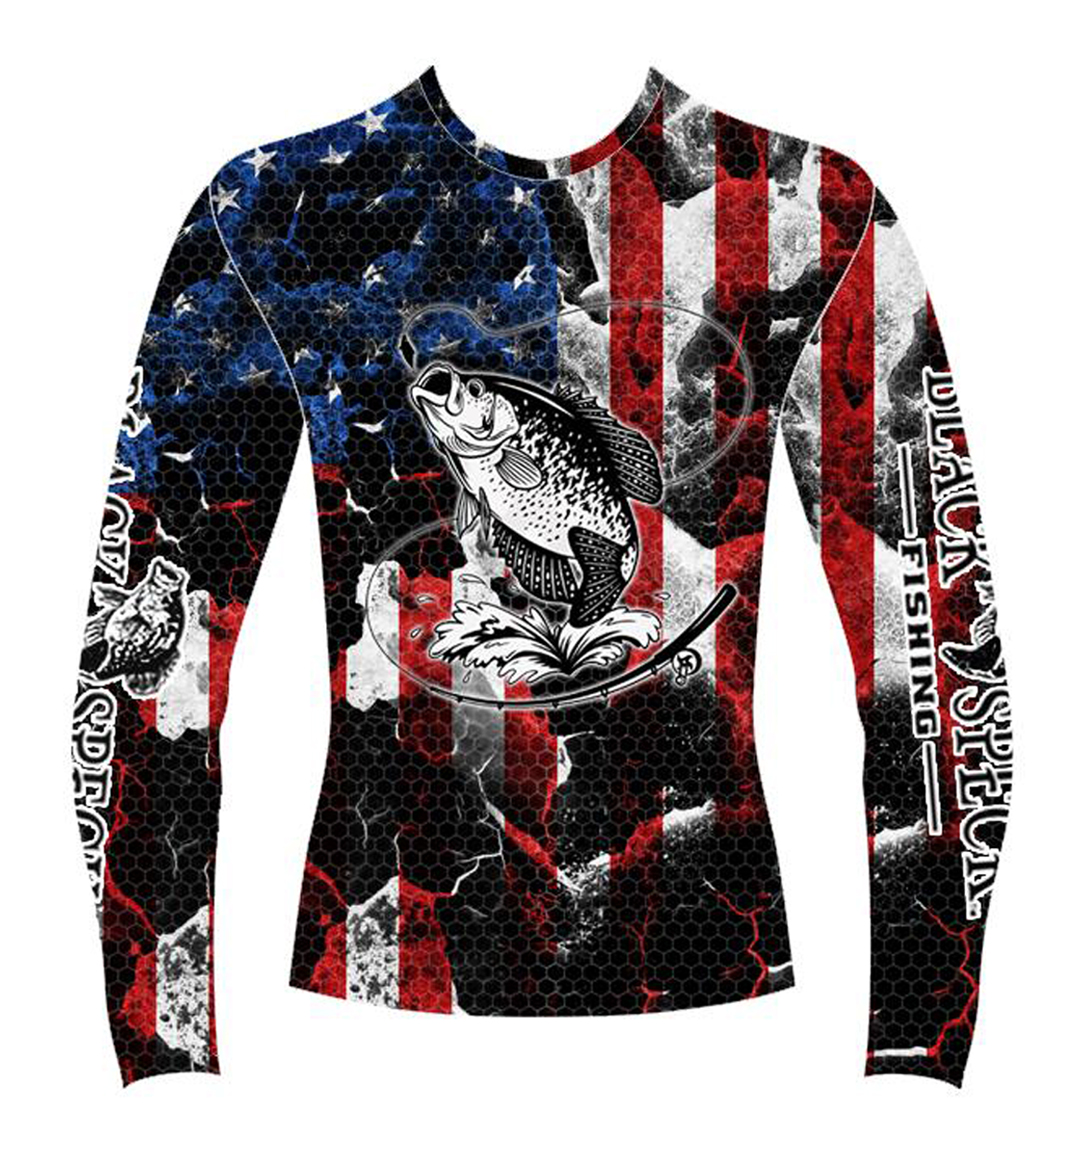 Flag Design SPF 50+ Long Sleeve Fishing Shirt - Slick Fish Gear Co. M